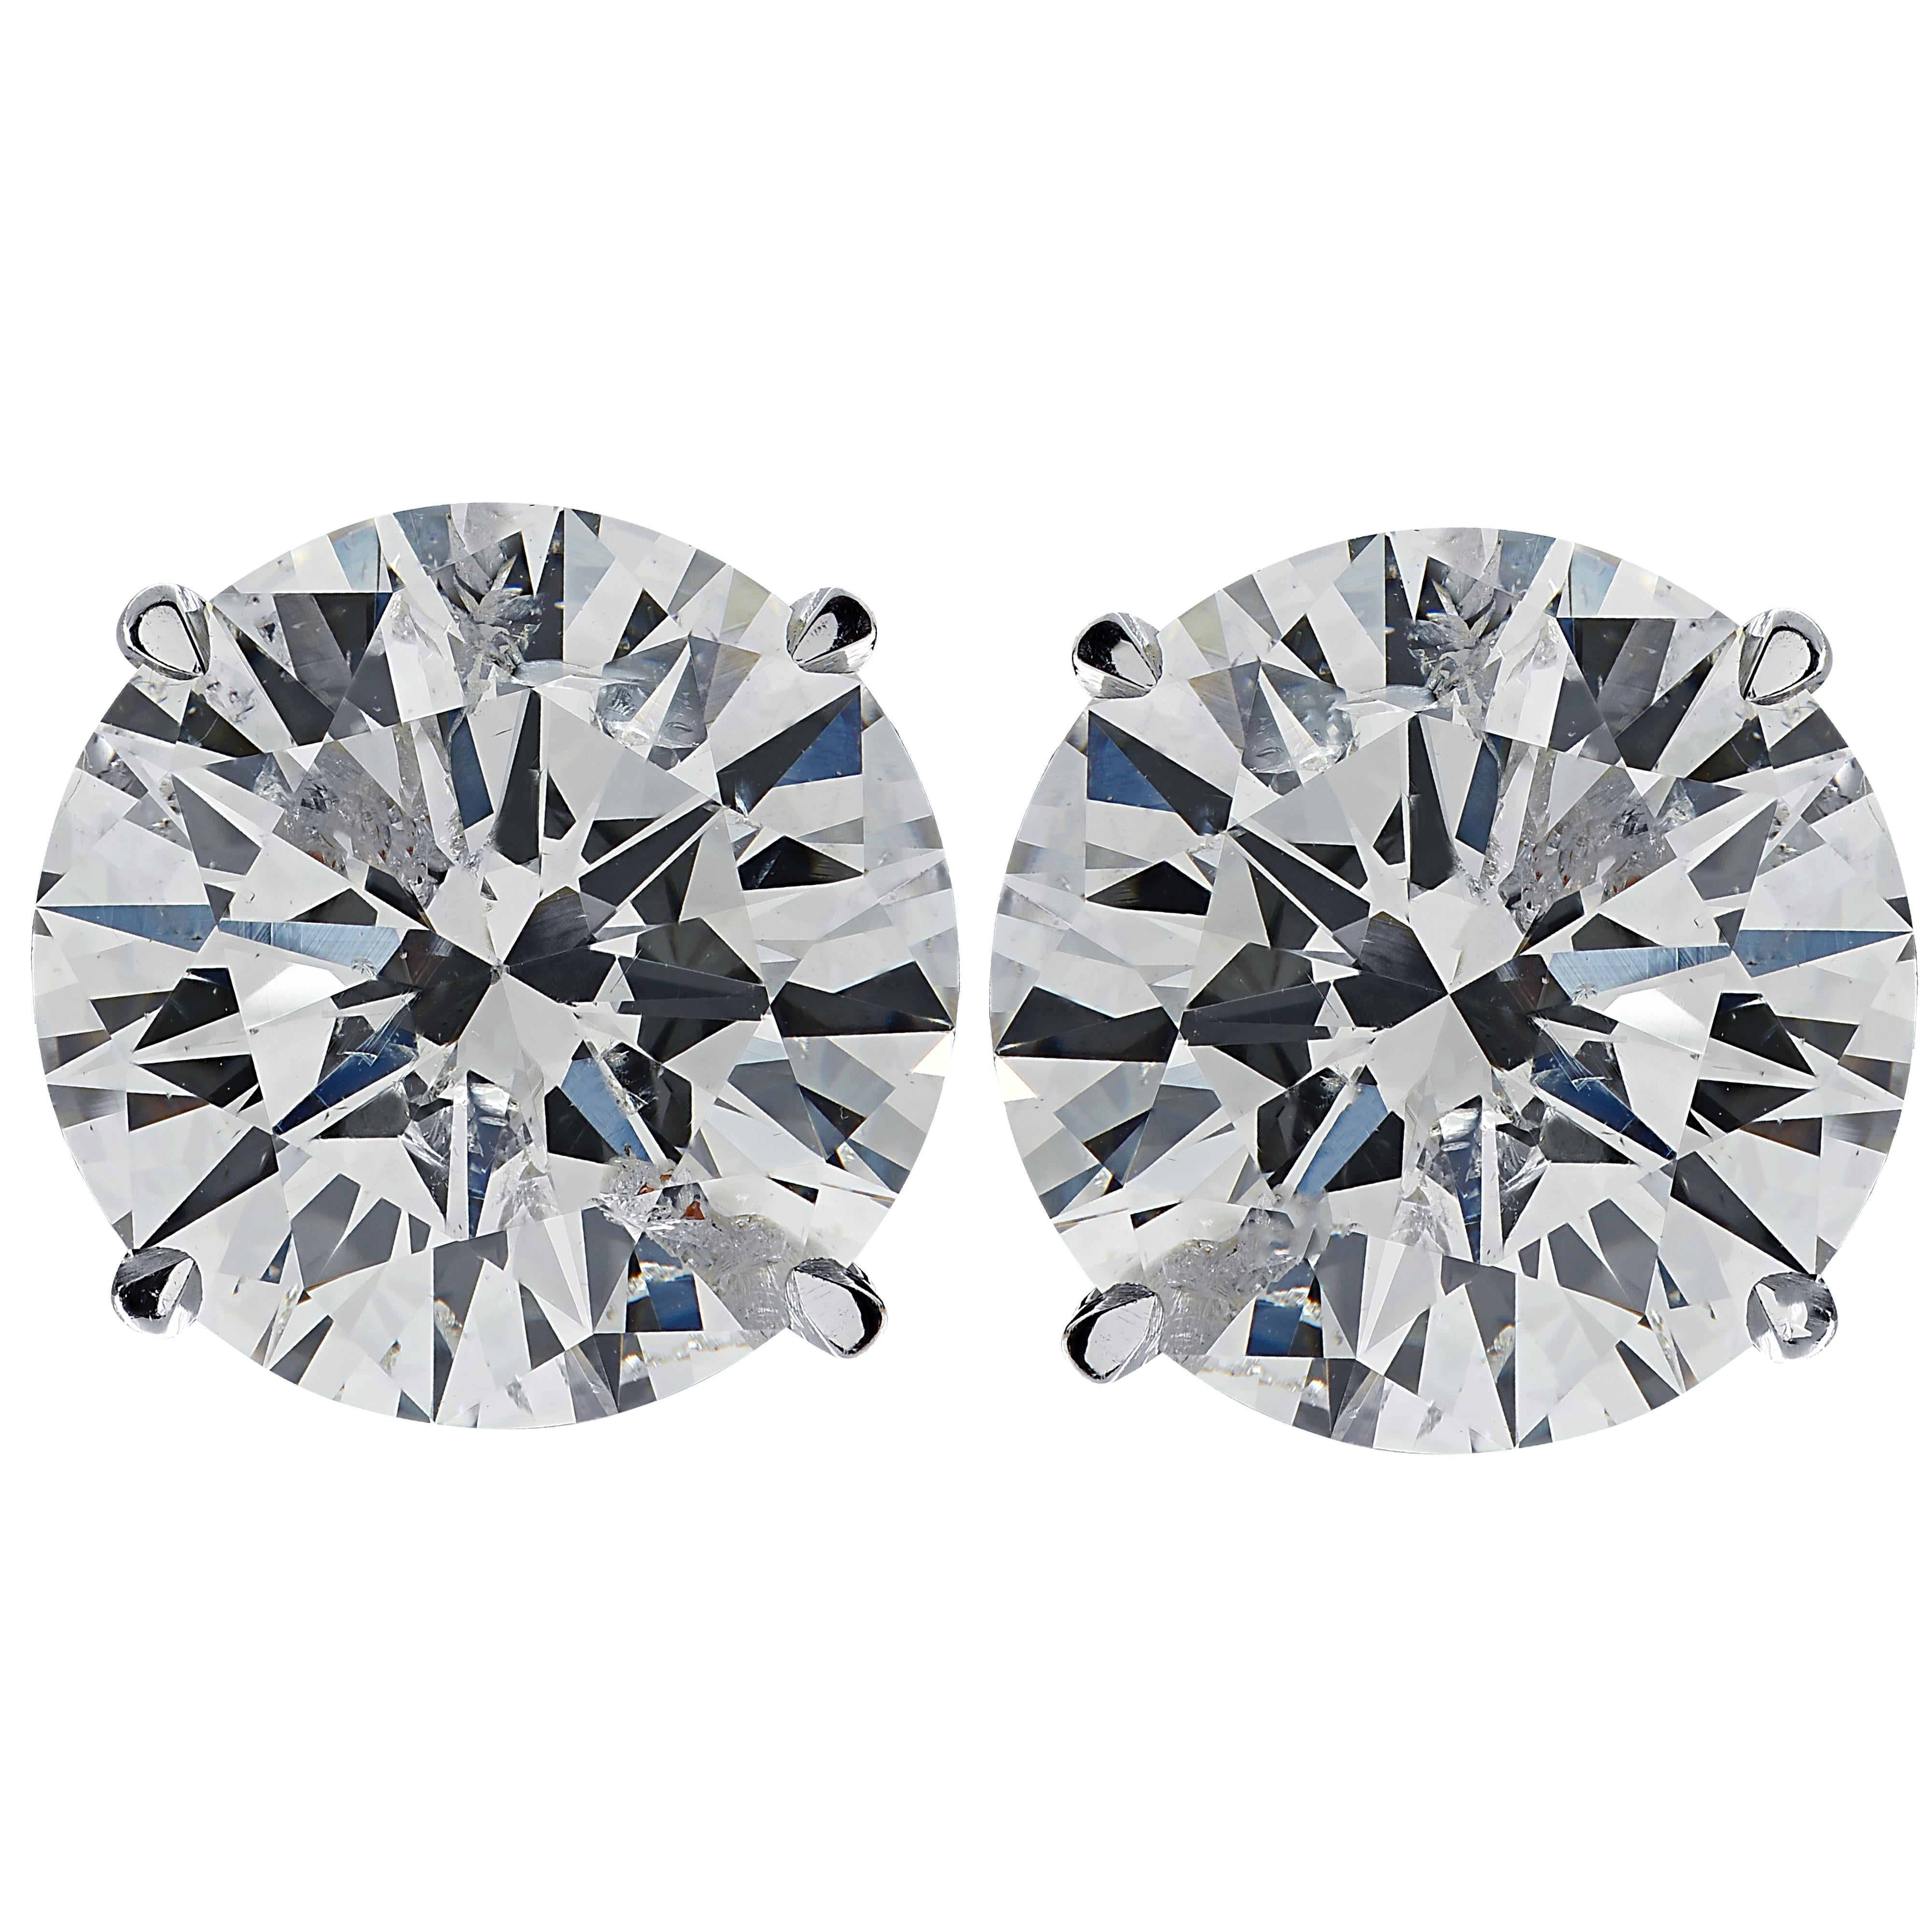 Round Cut Vivid Diamonds 2.08 Carat Diamond Solitaire Stud Earrings